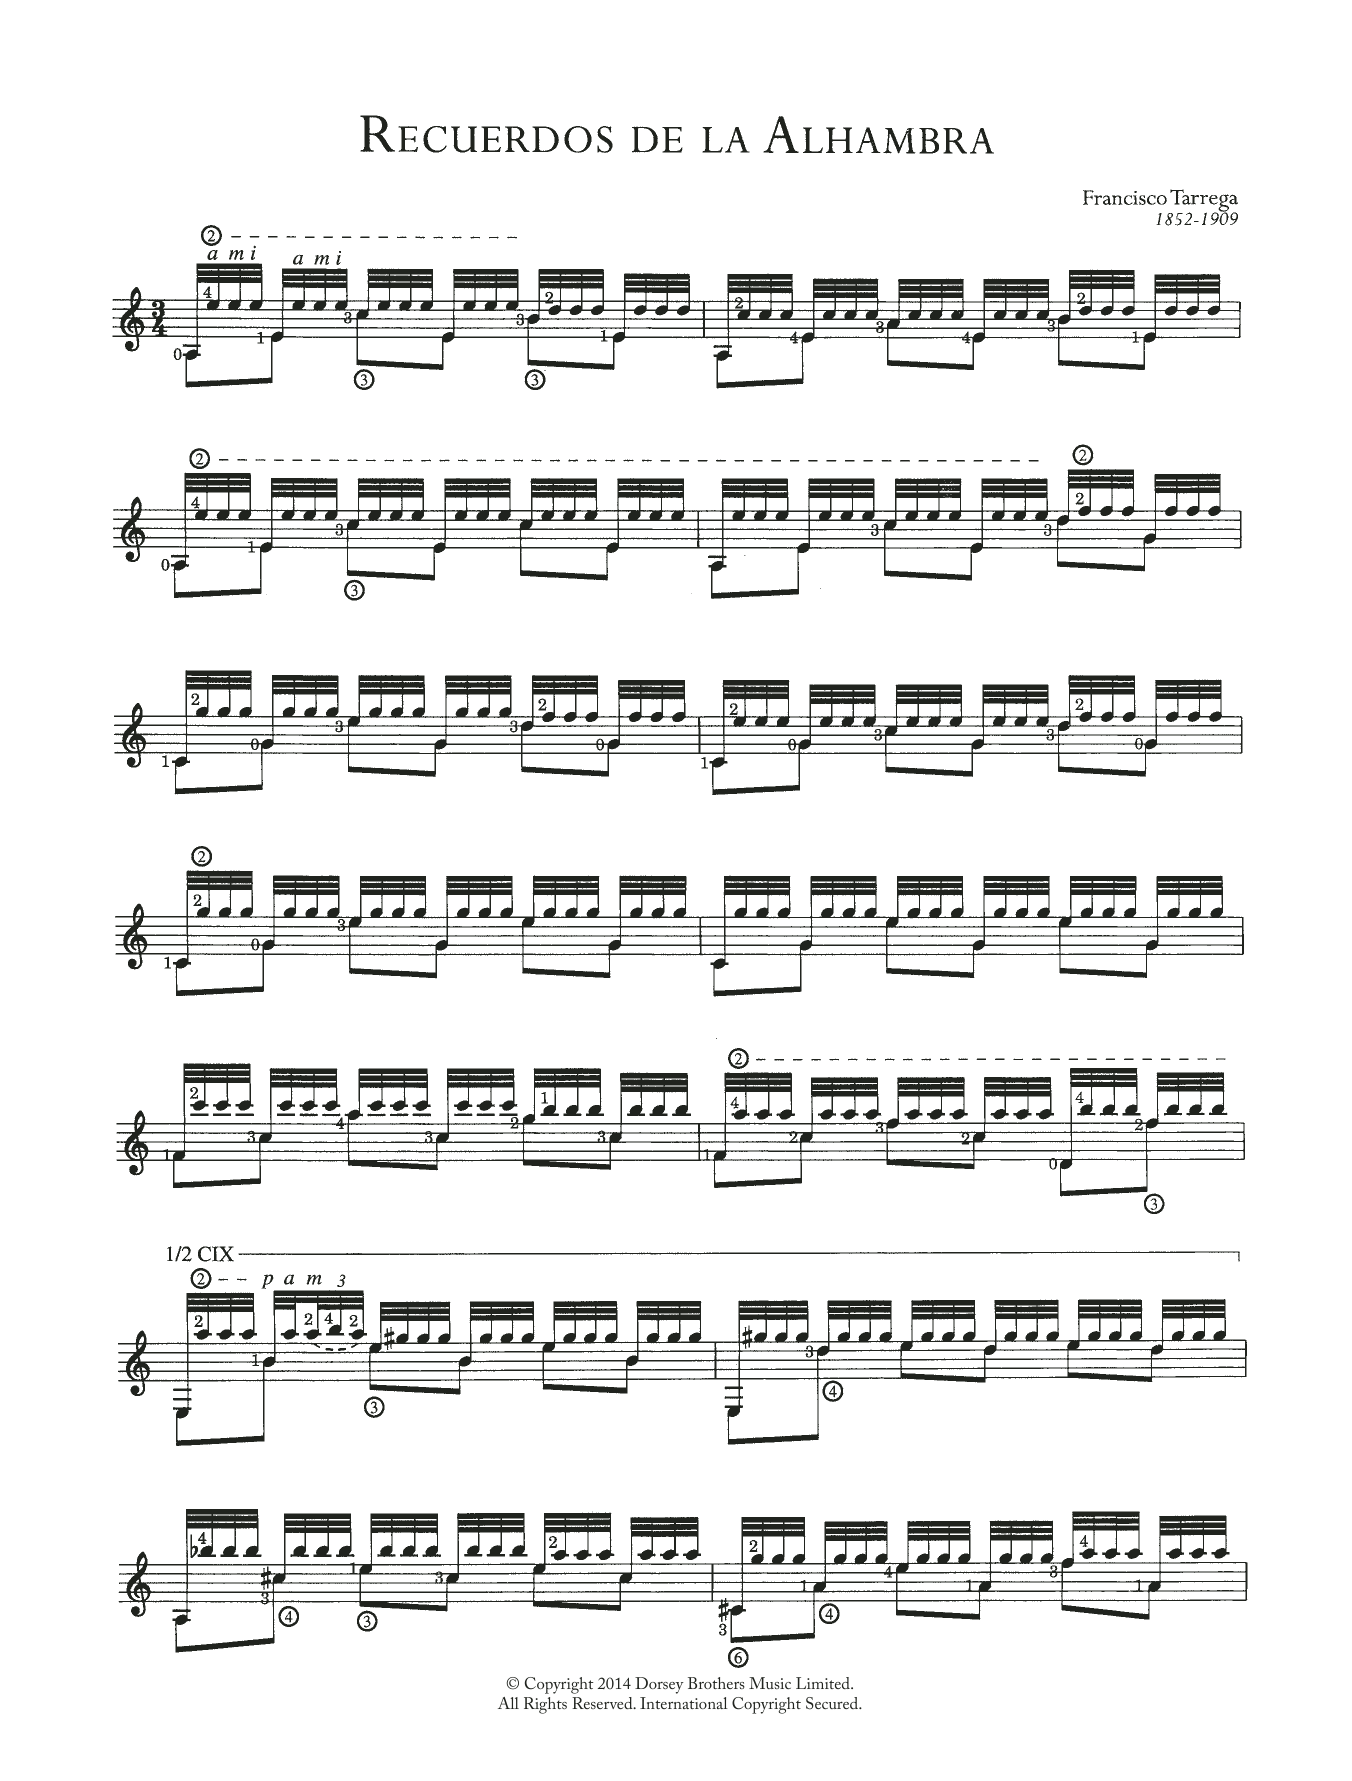 Francisco Tarrega Recuerdos de la Alhambra Sheet Music Notes & Chords for Solo Guitar Tab - Download or Print PDF